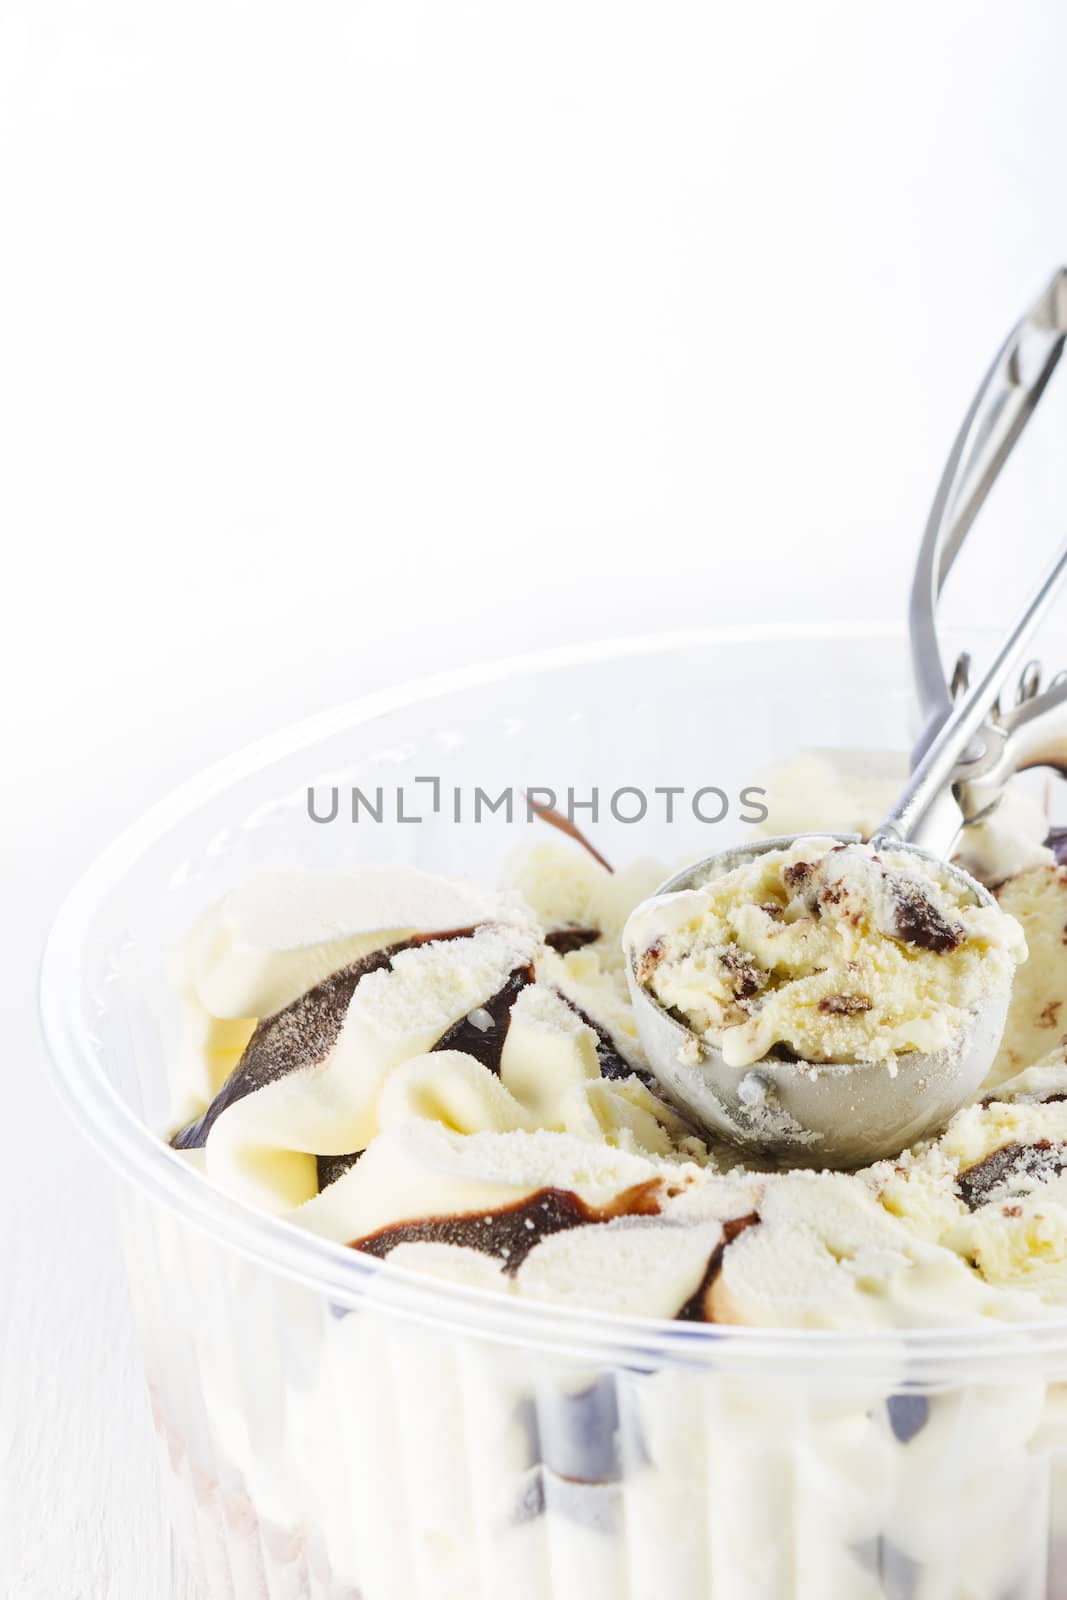 Vanilla with chocolate ice cream scoop by manaemedia